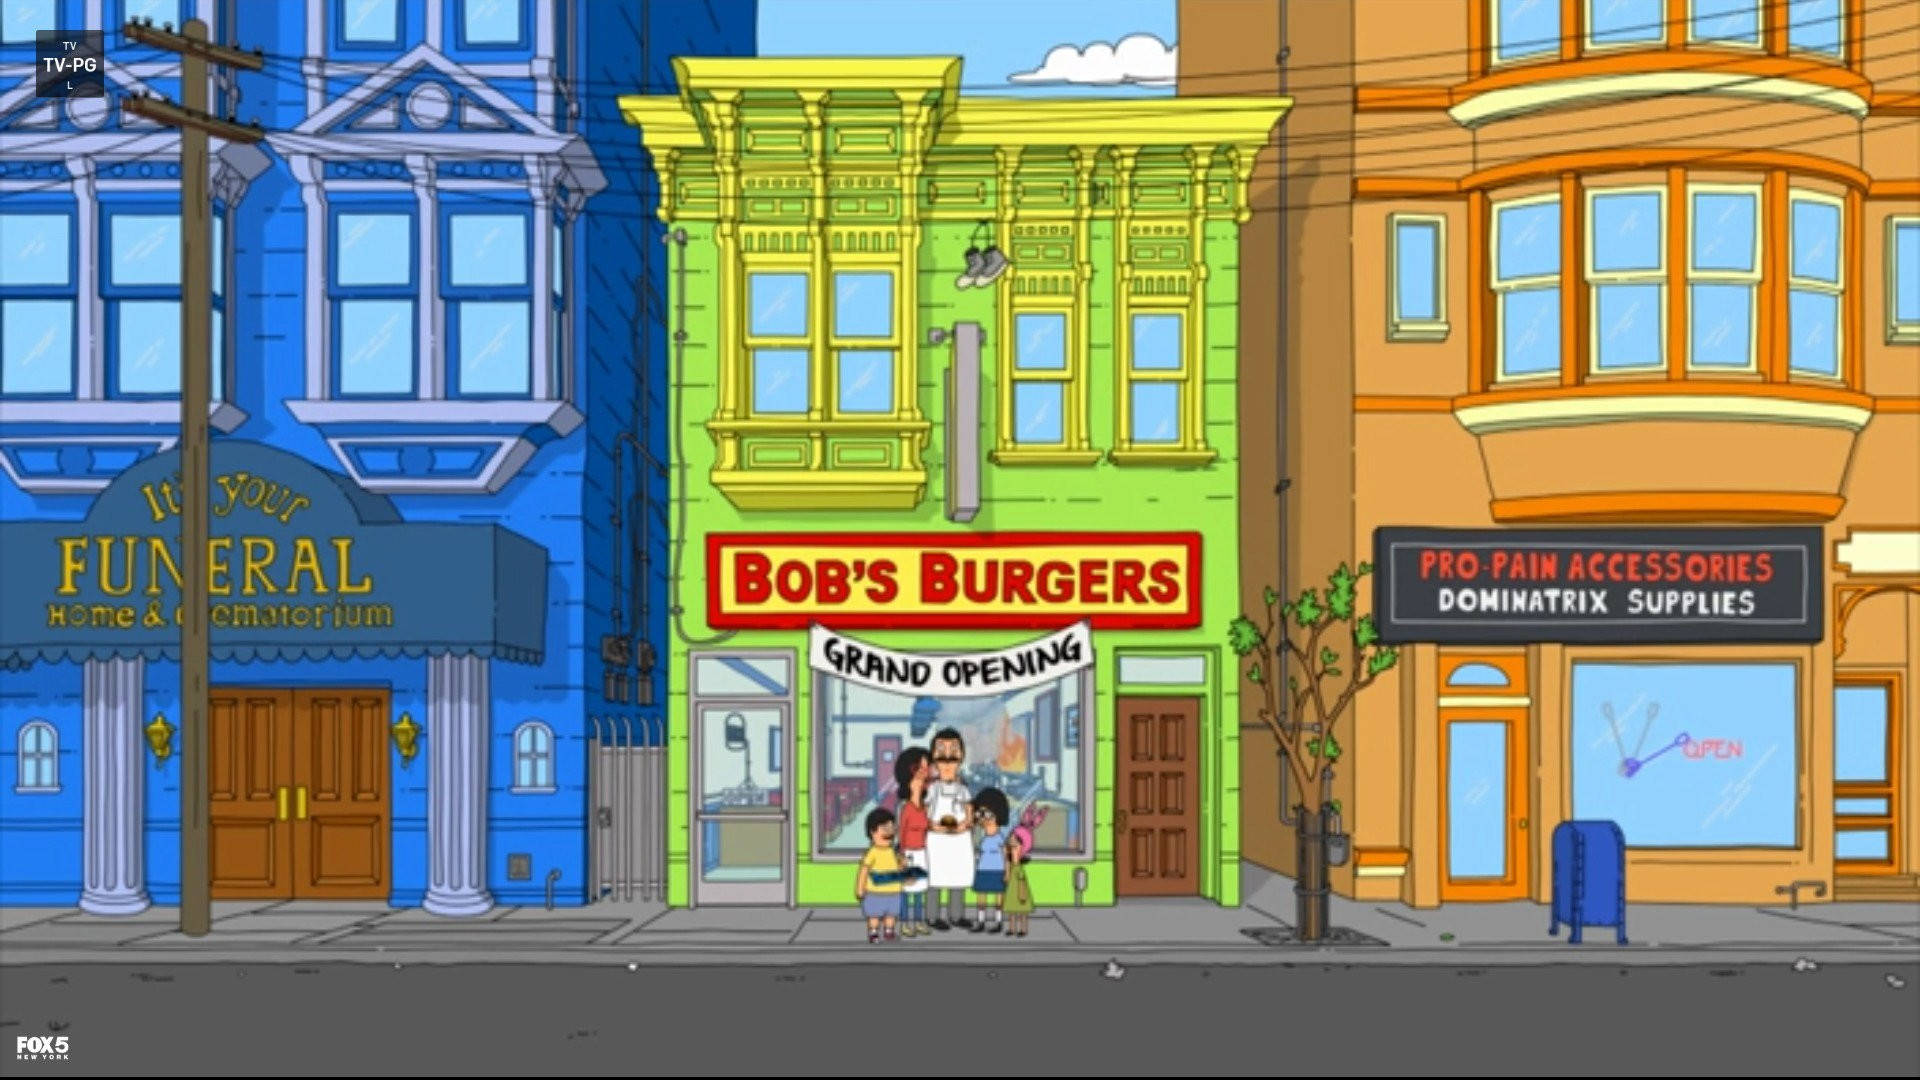 Bobs Burgers In Between Two Buildings Wallpaper